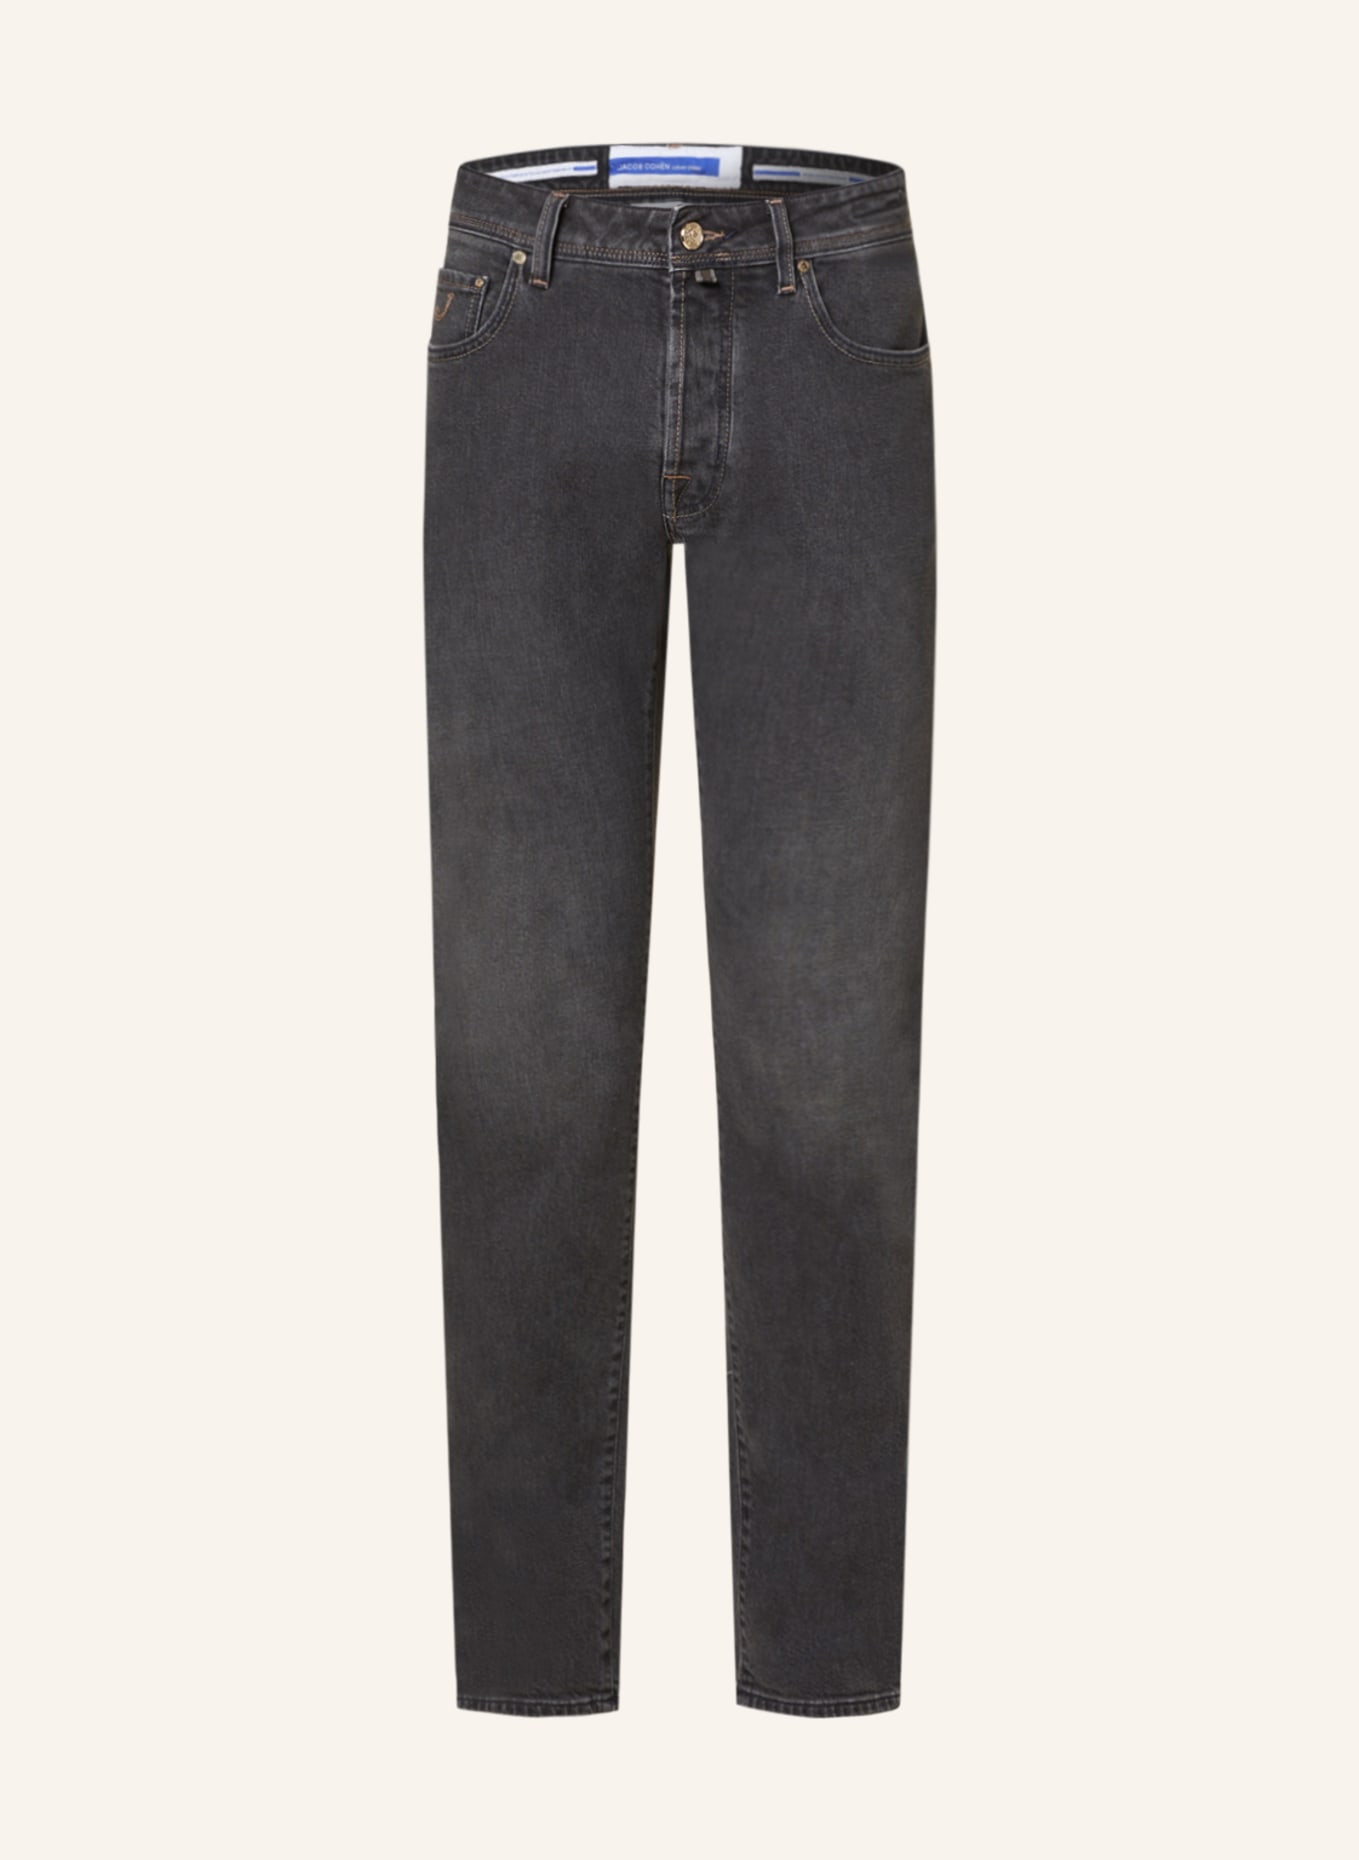 JACOB COHEN Jeans BARD Slim Fit, Farbe: 625D Grey (Bild 1)